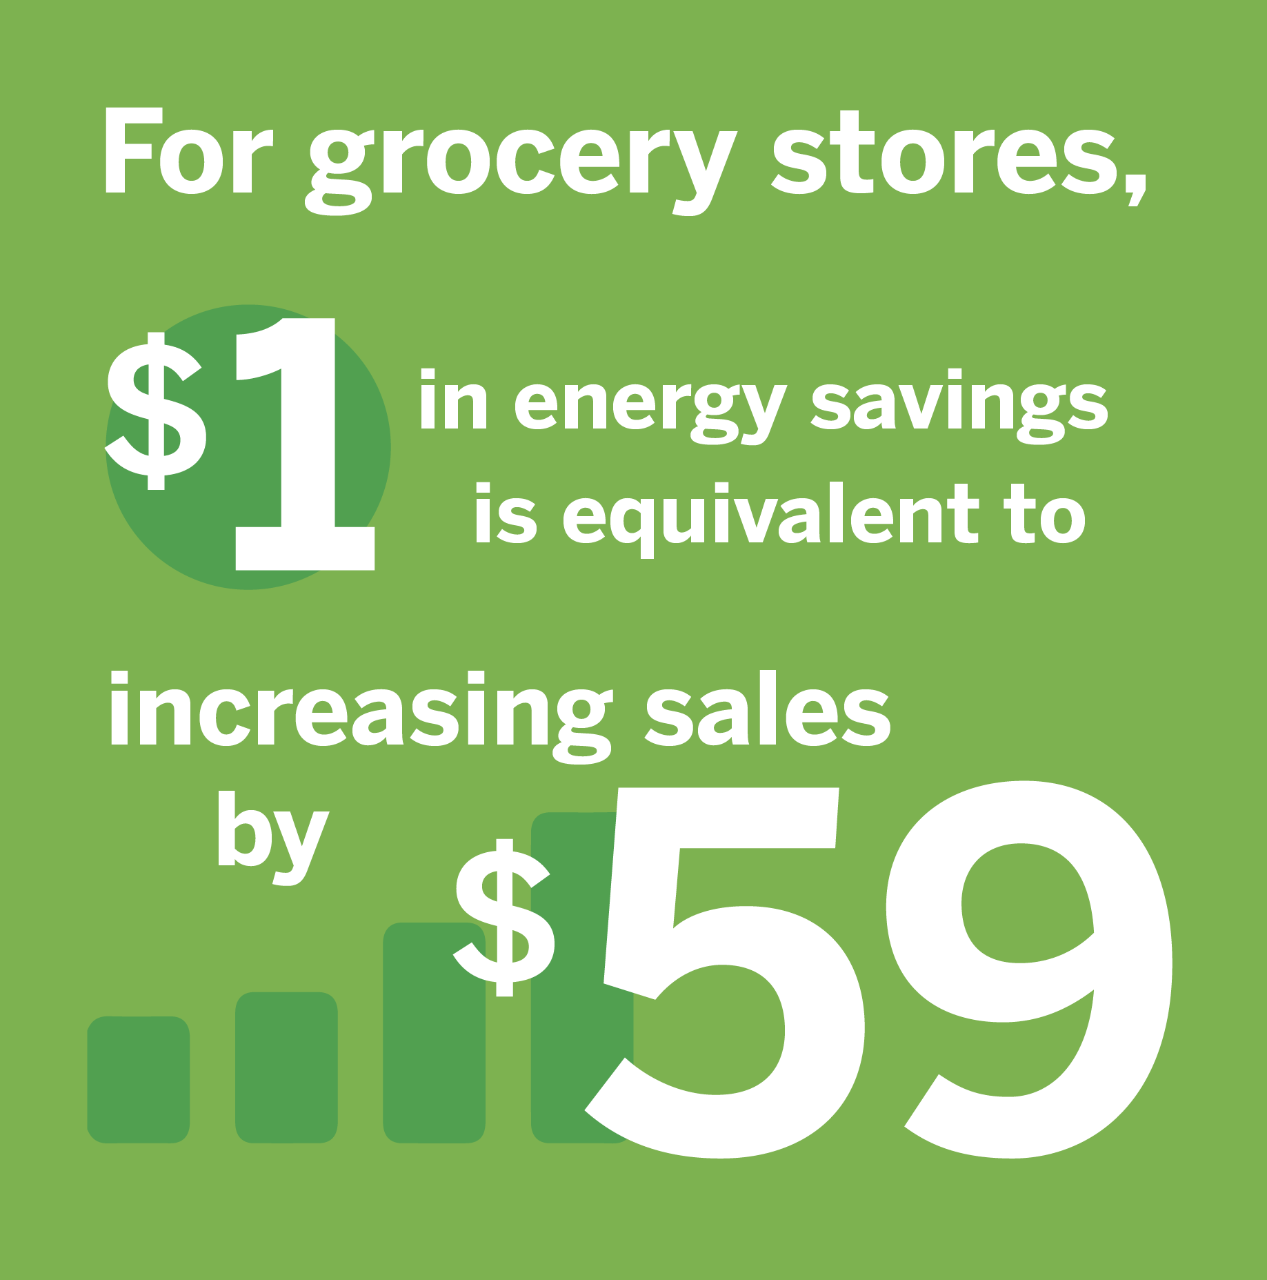 Grocery store energy savings.